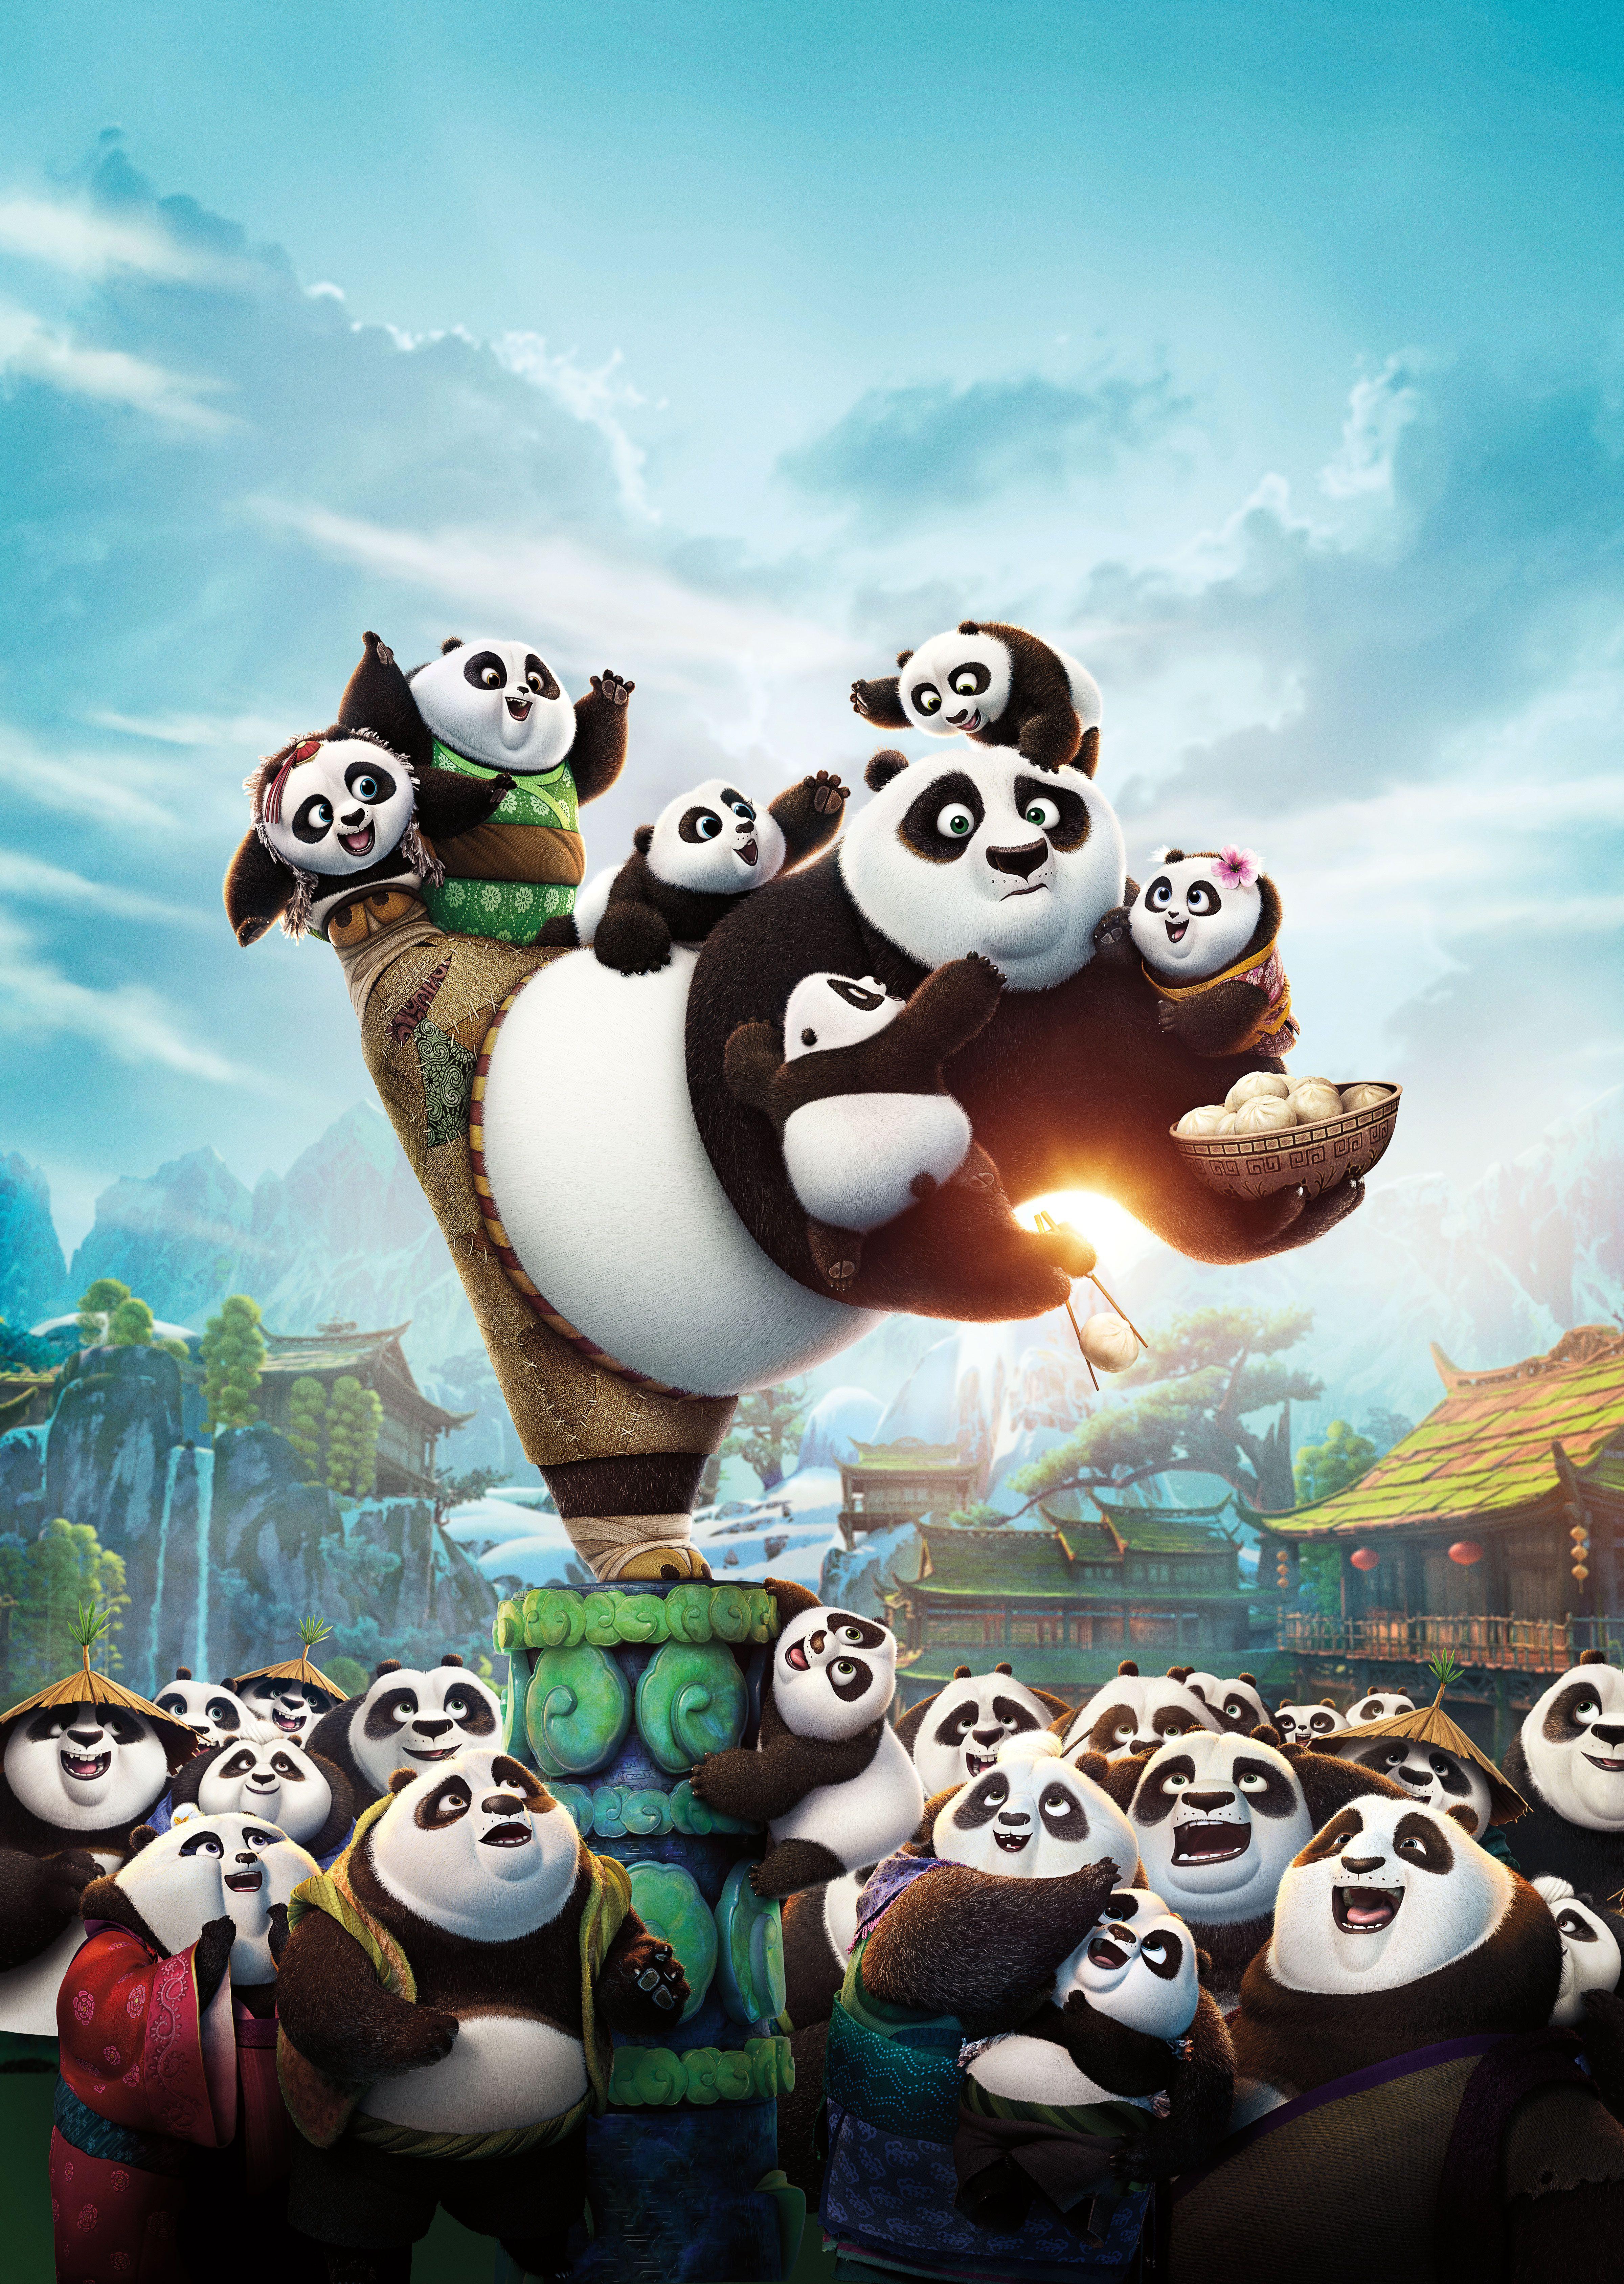 Kung Fu Panda Movie Video Image. wallpaper. Kung fu